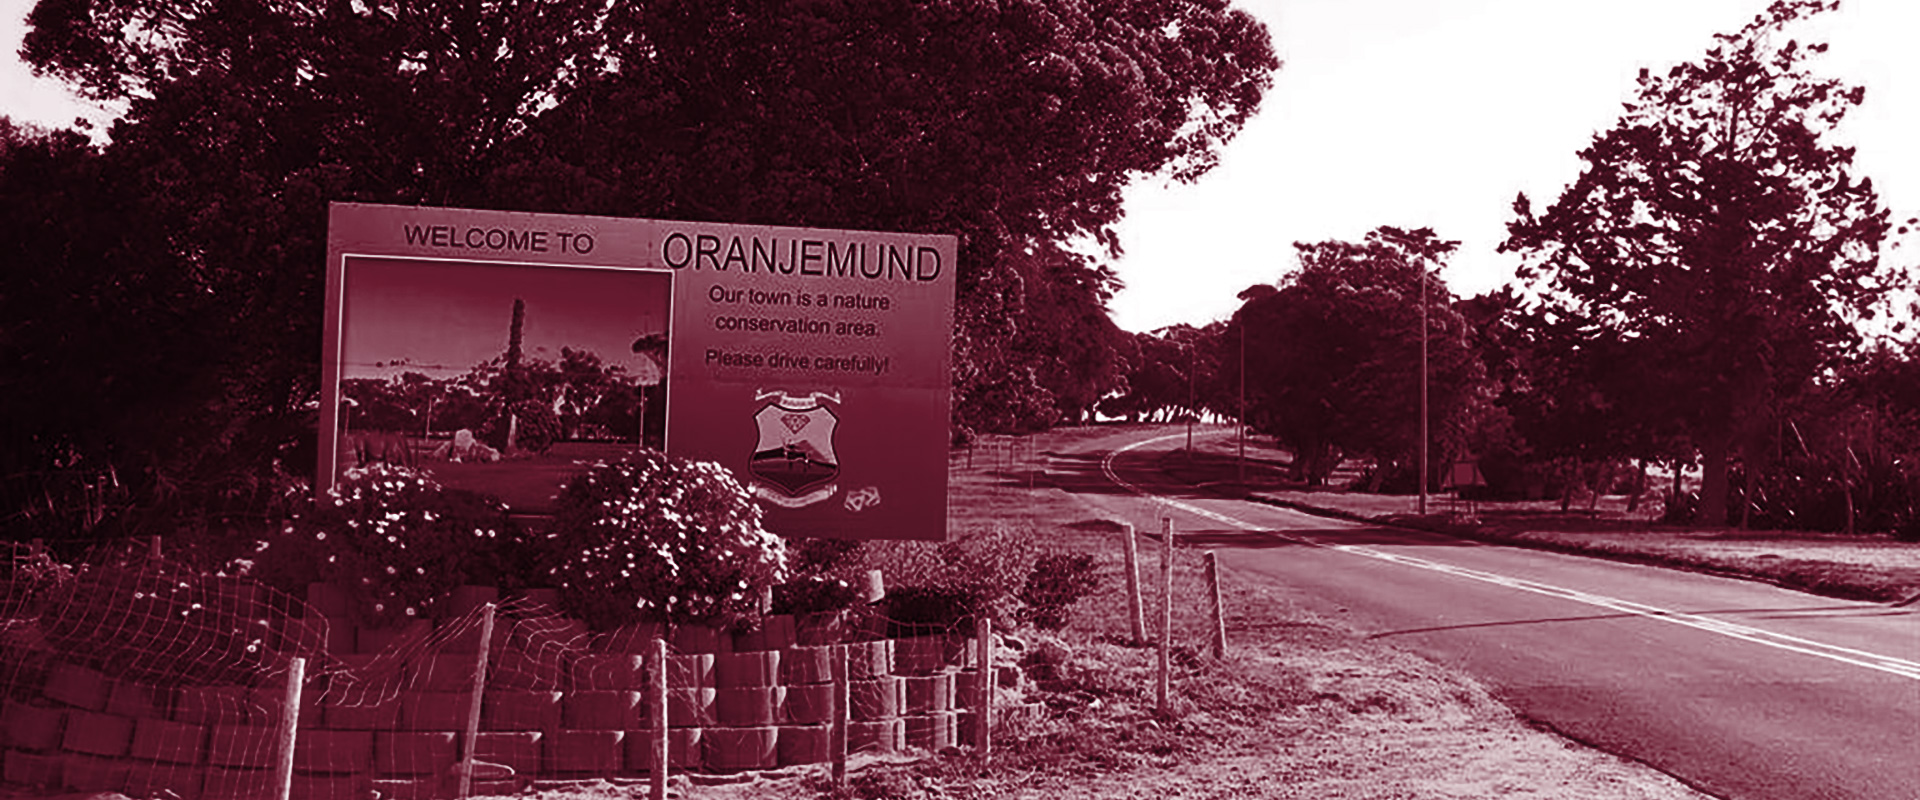 Welcome to Oranjemund